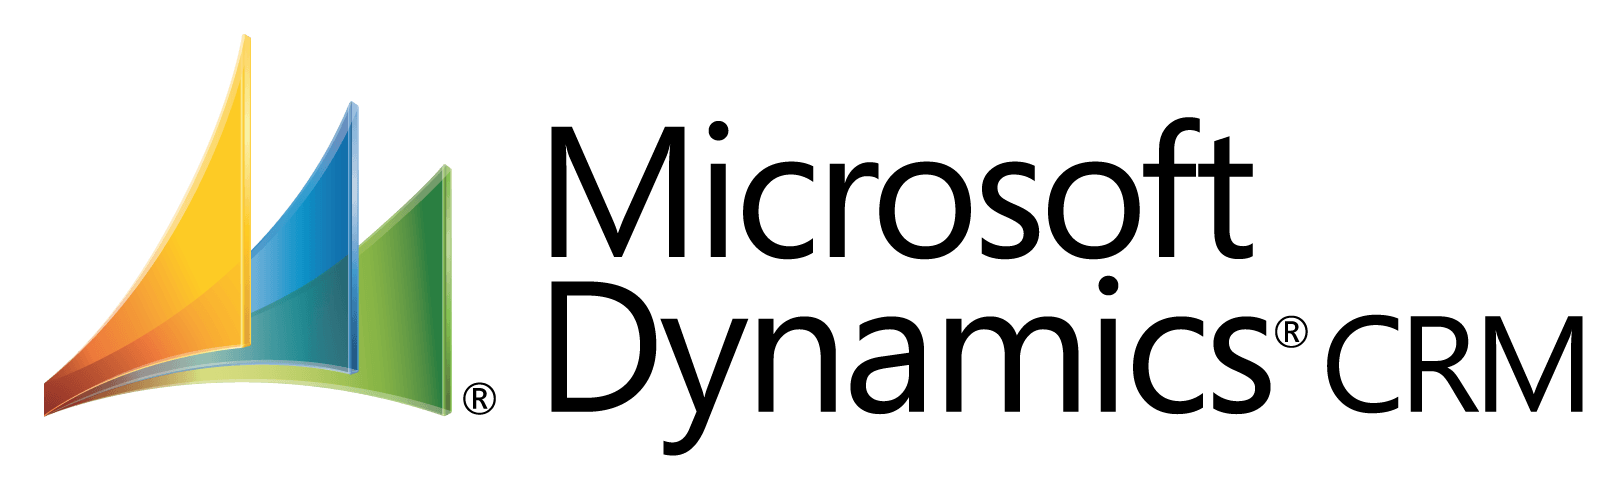 MS Dynamics CRM Logo - Image - Dynamics-crm.png | Logopedia | FANDOM powered by Wikia